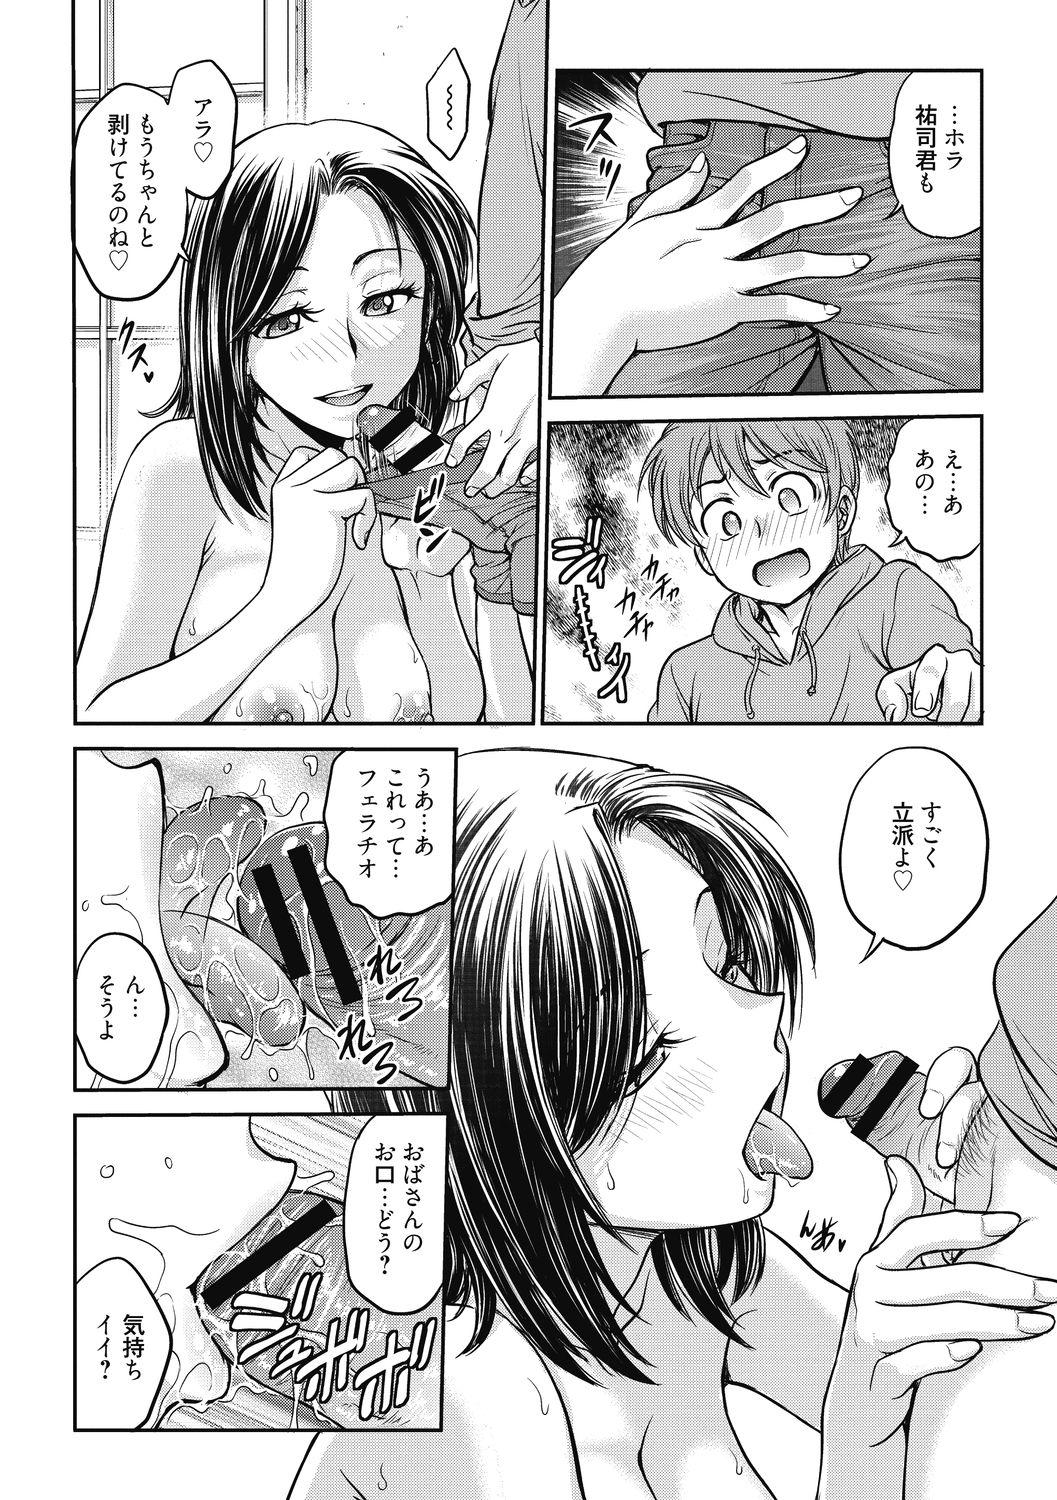 Doggy Kanojo no Shitagi o Nusundara... - I tried to steal her underwear... Monstercock - Page 10